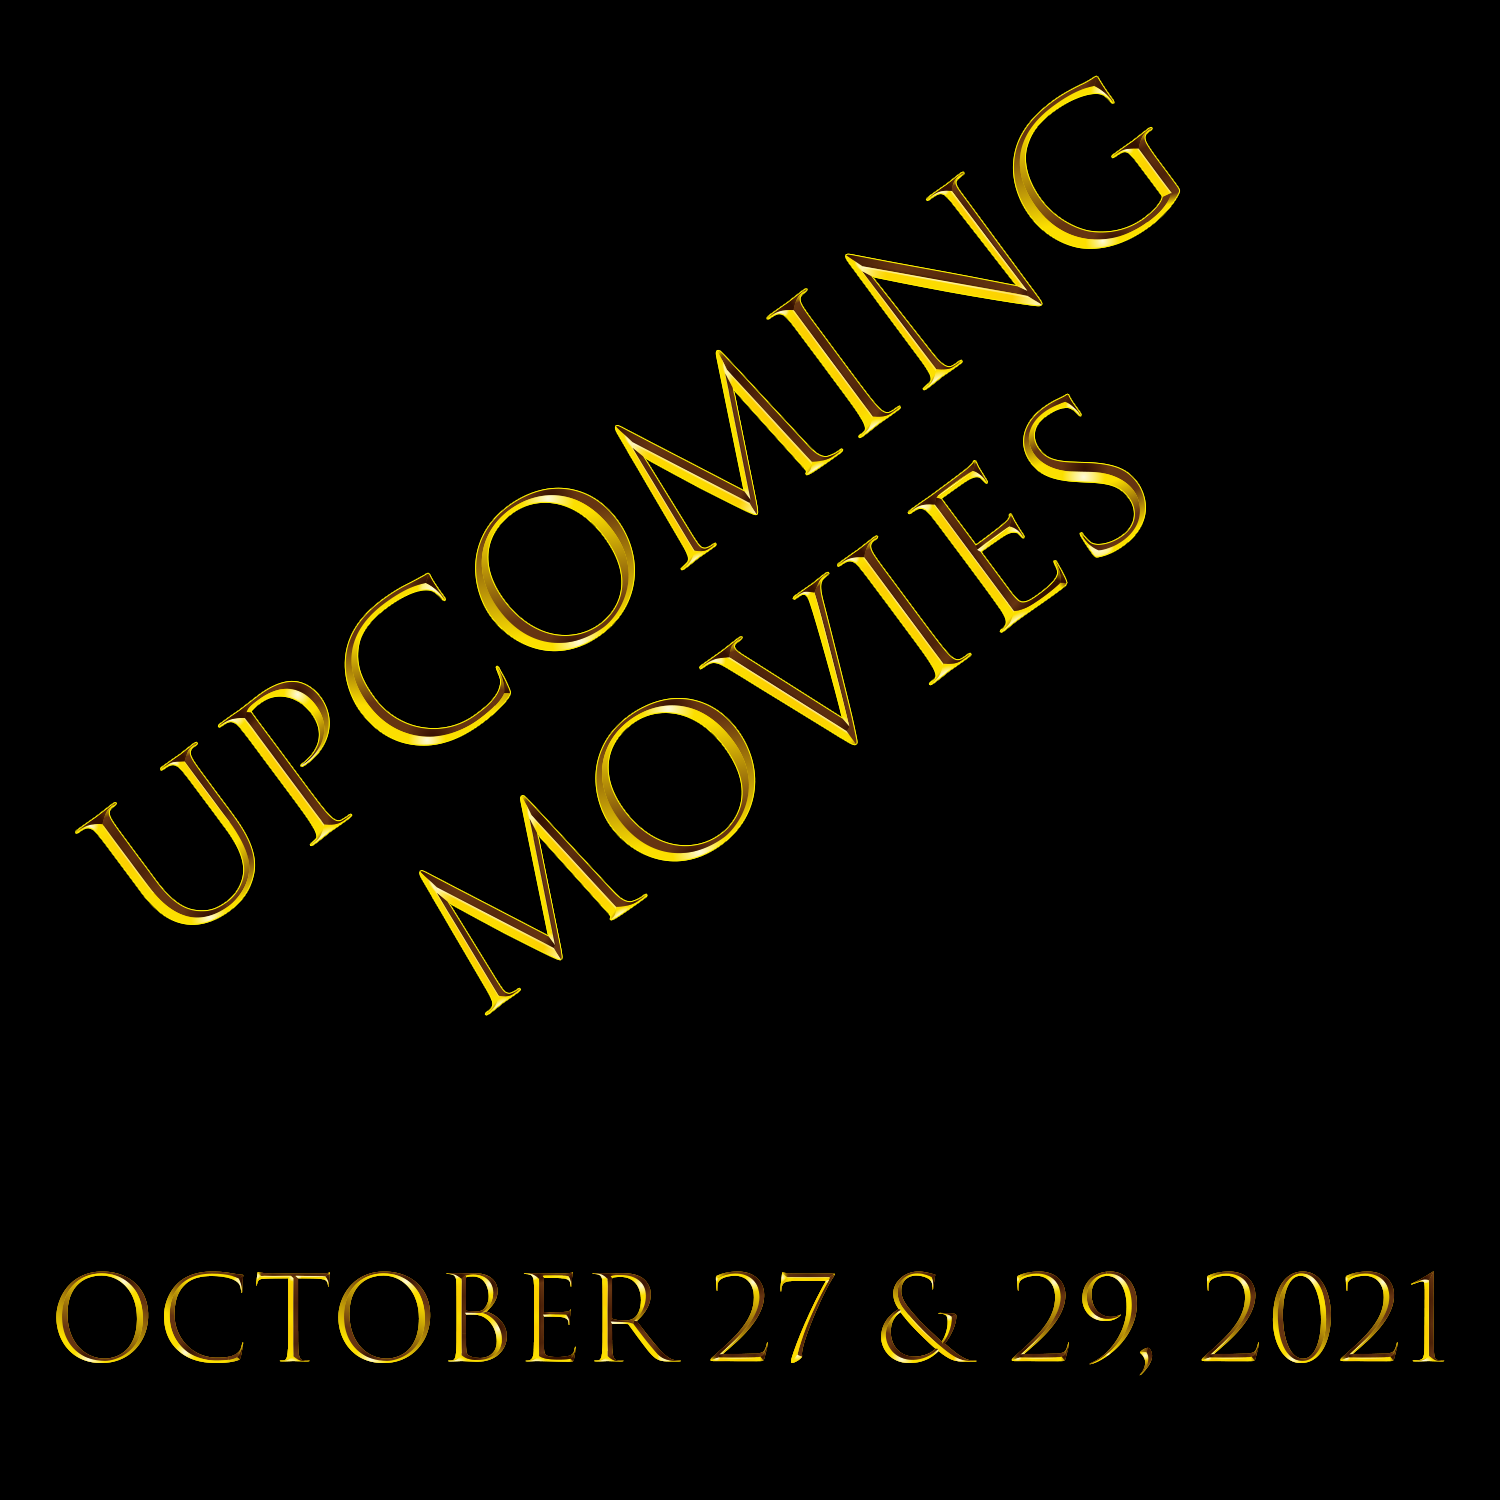 Upcoming movies - October 27th and 29th, 2021